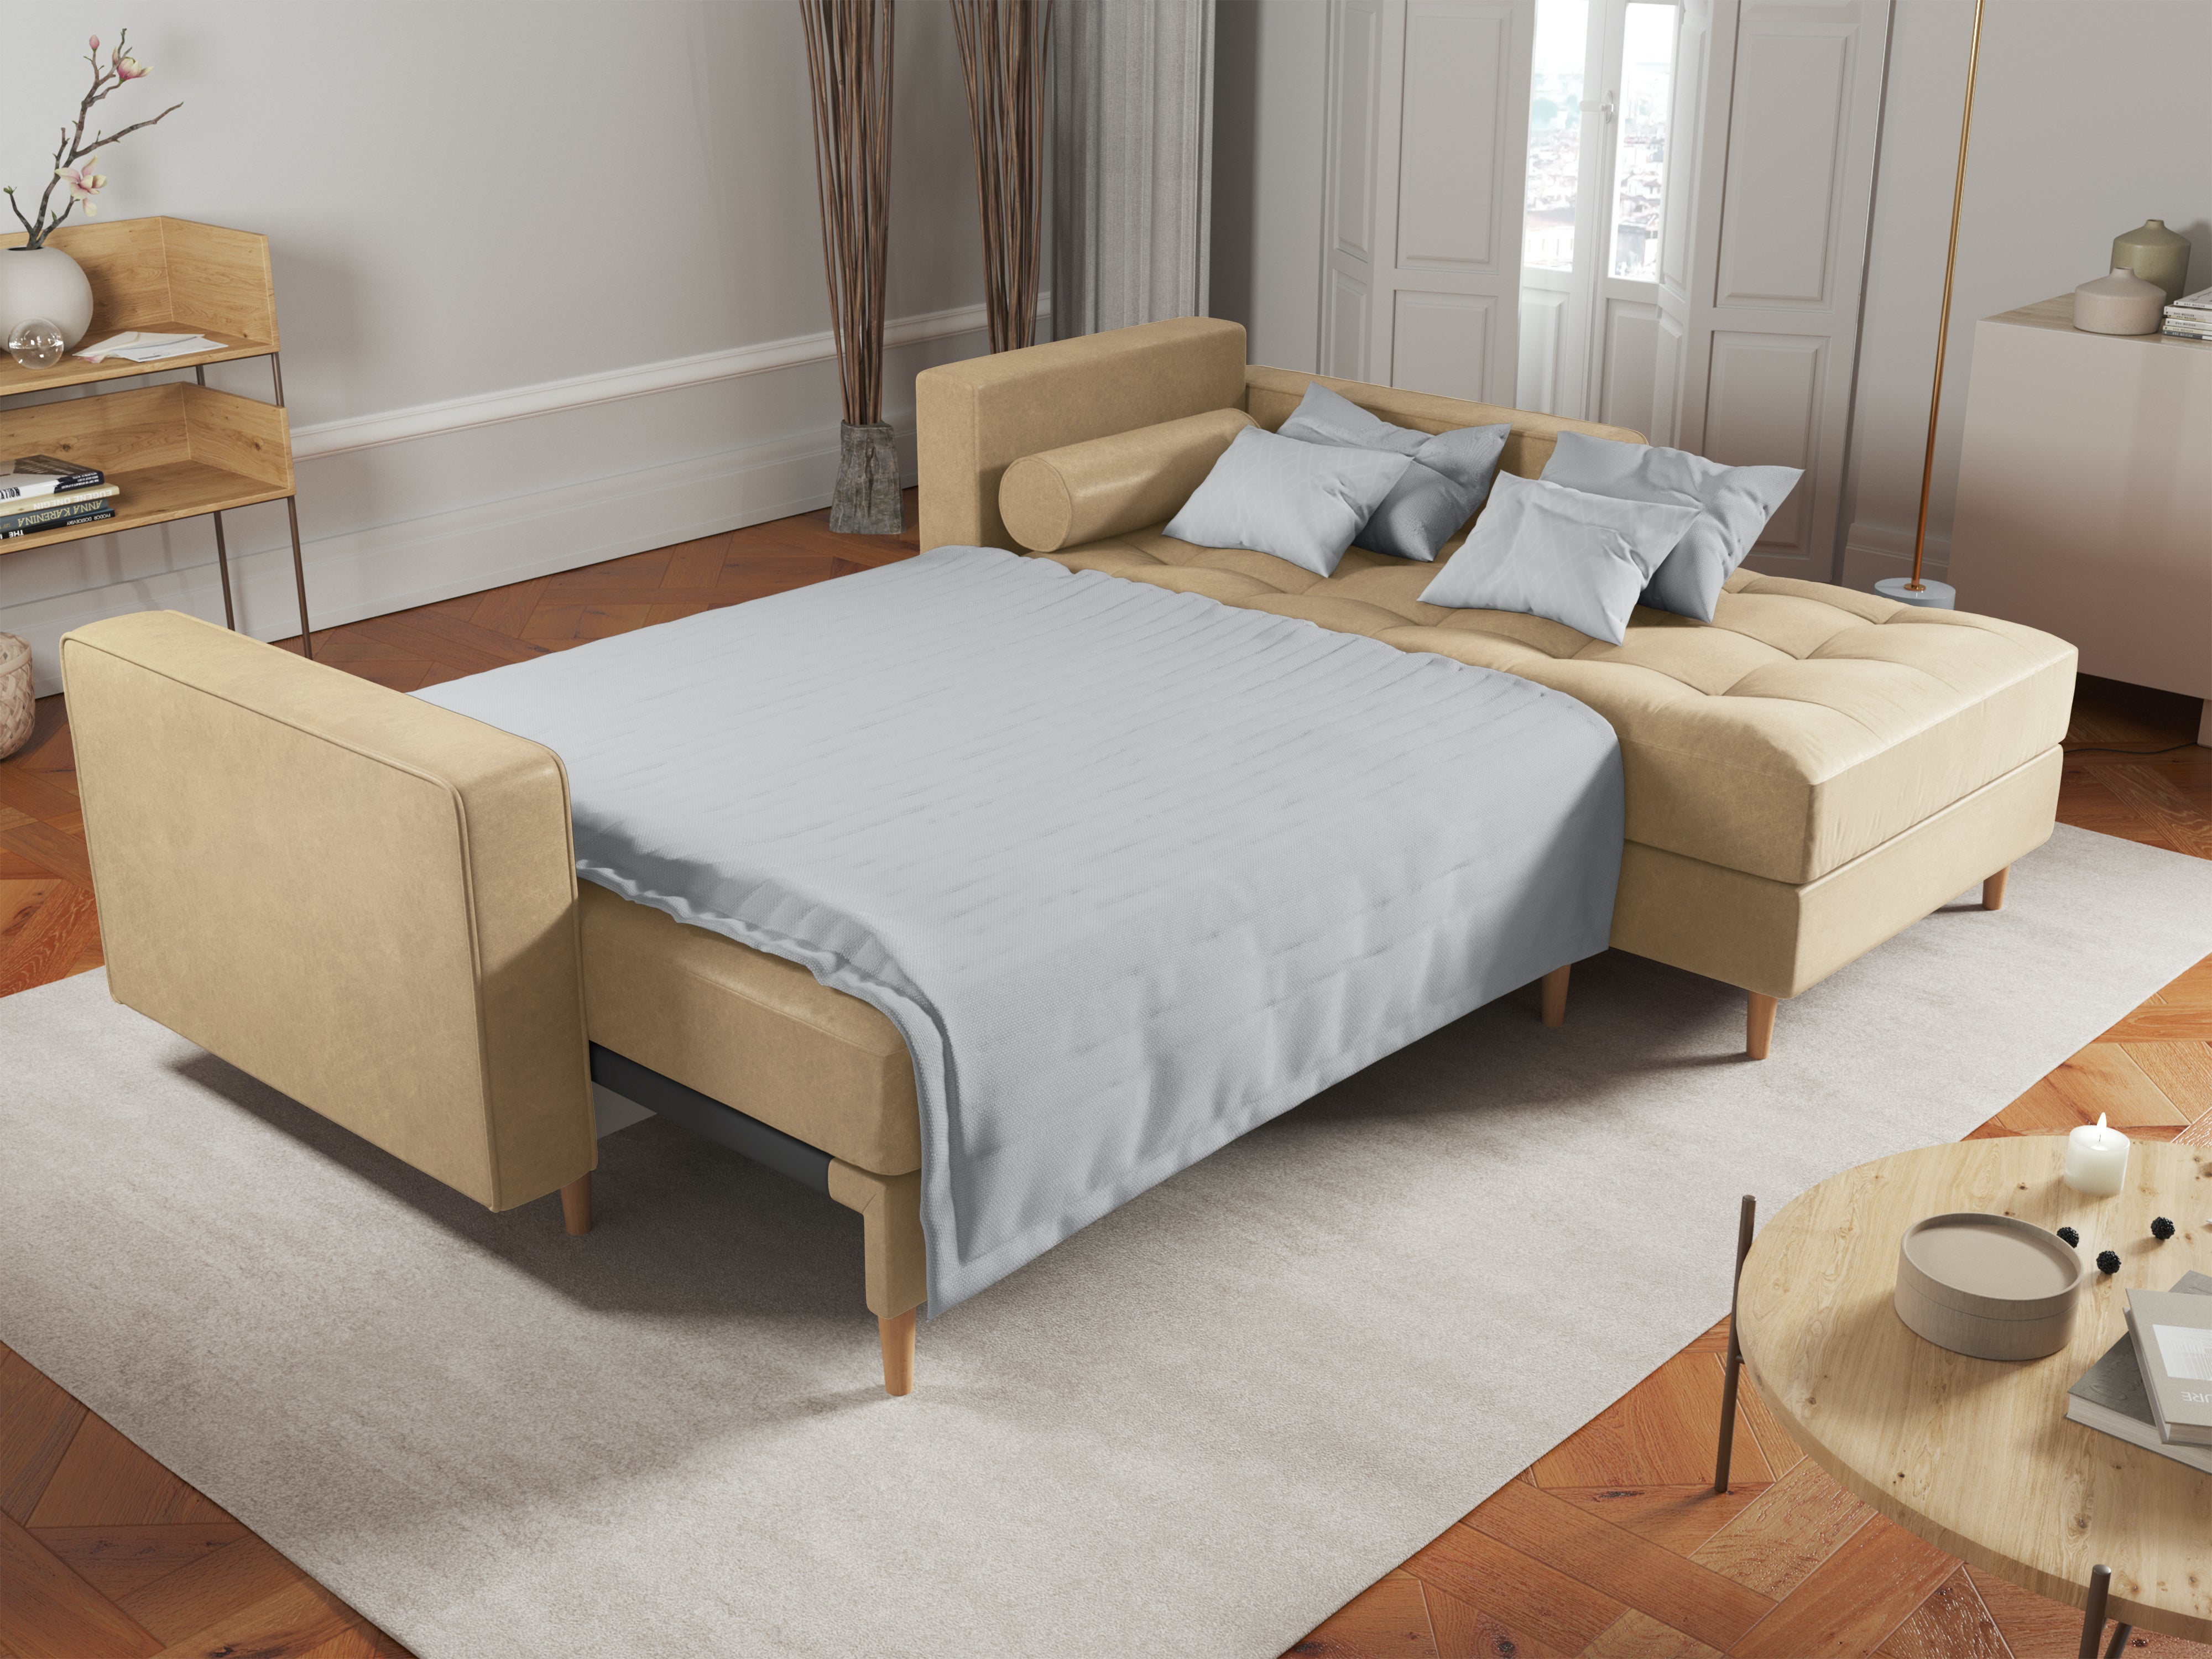 Right-angled corner sofa with sleeping function GOBI eco leather sand-coloured